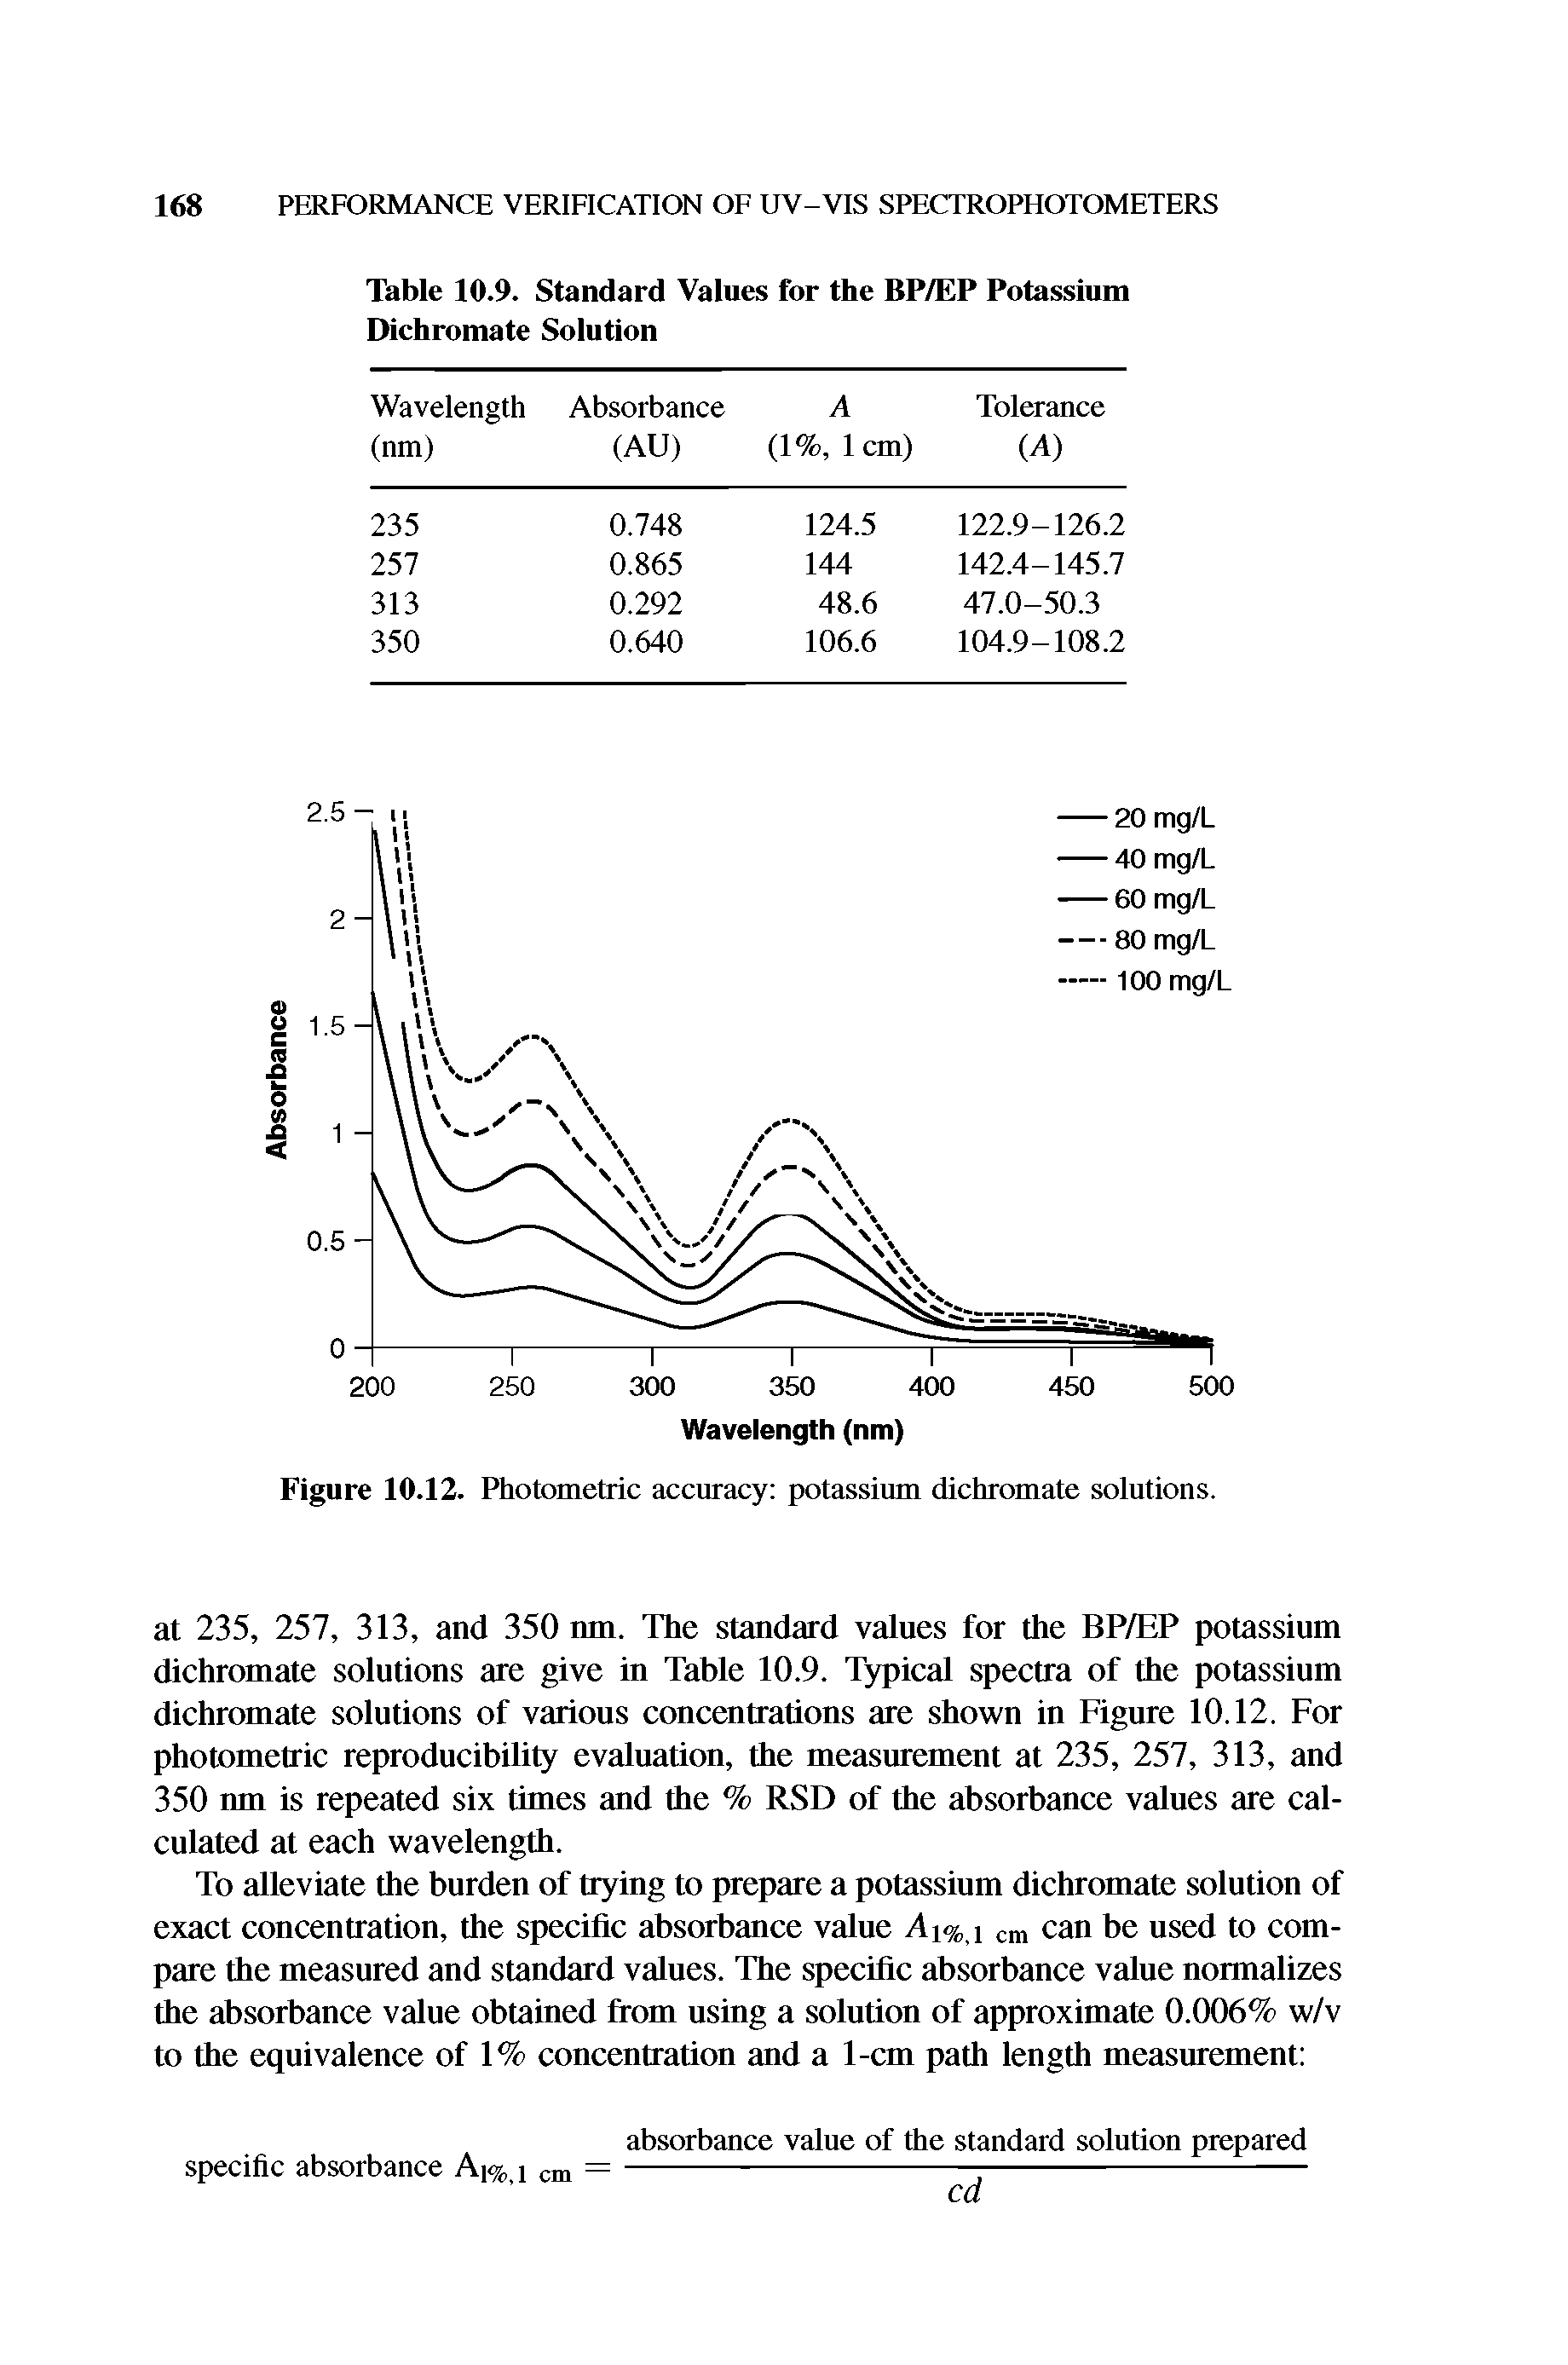 Figure 10.12. Photometric accuracy potassium dichromate solutions.